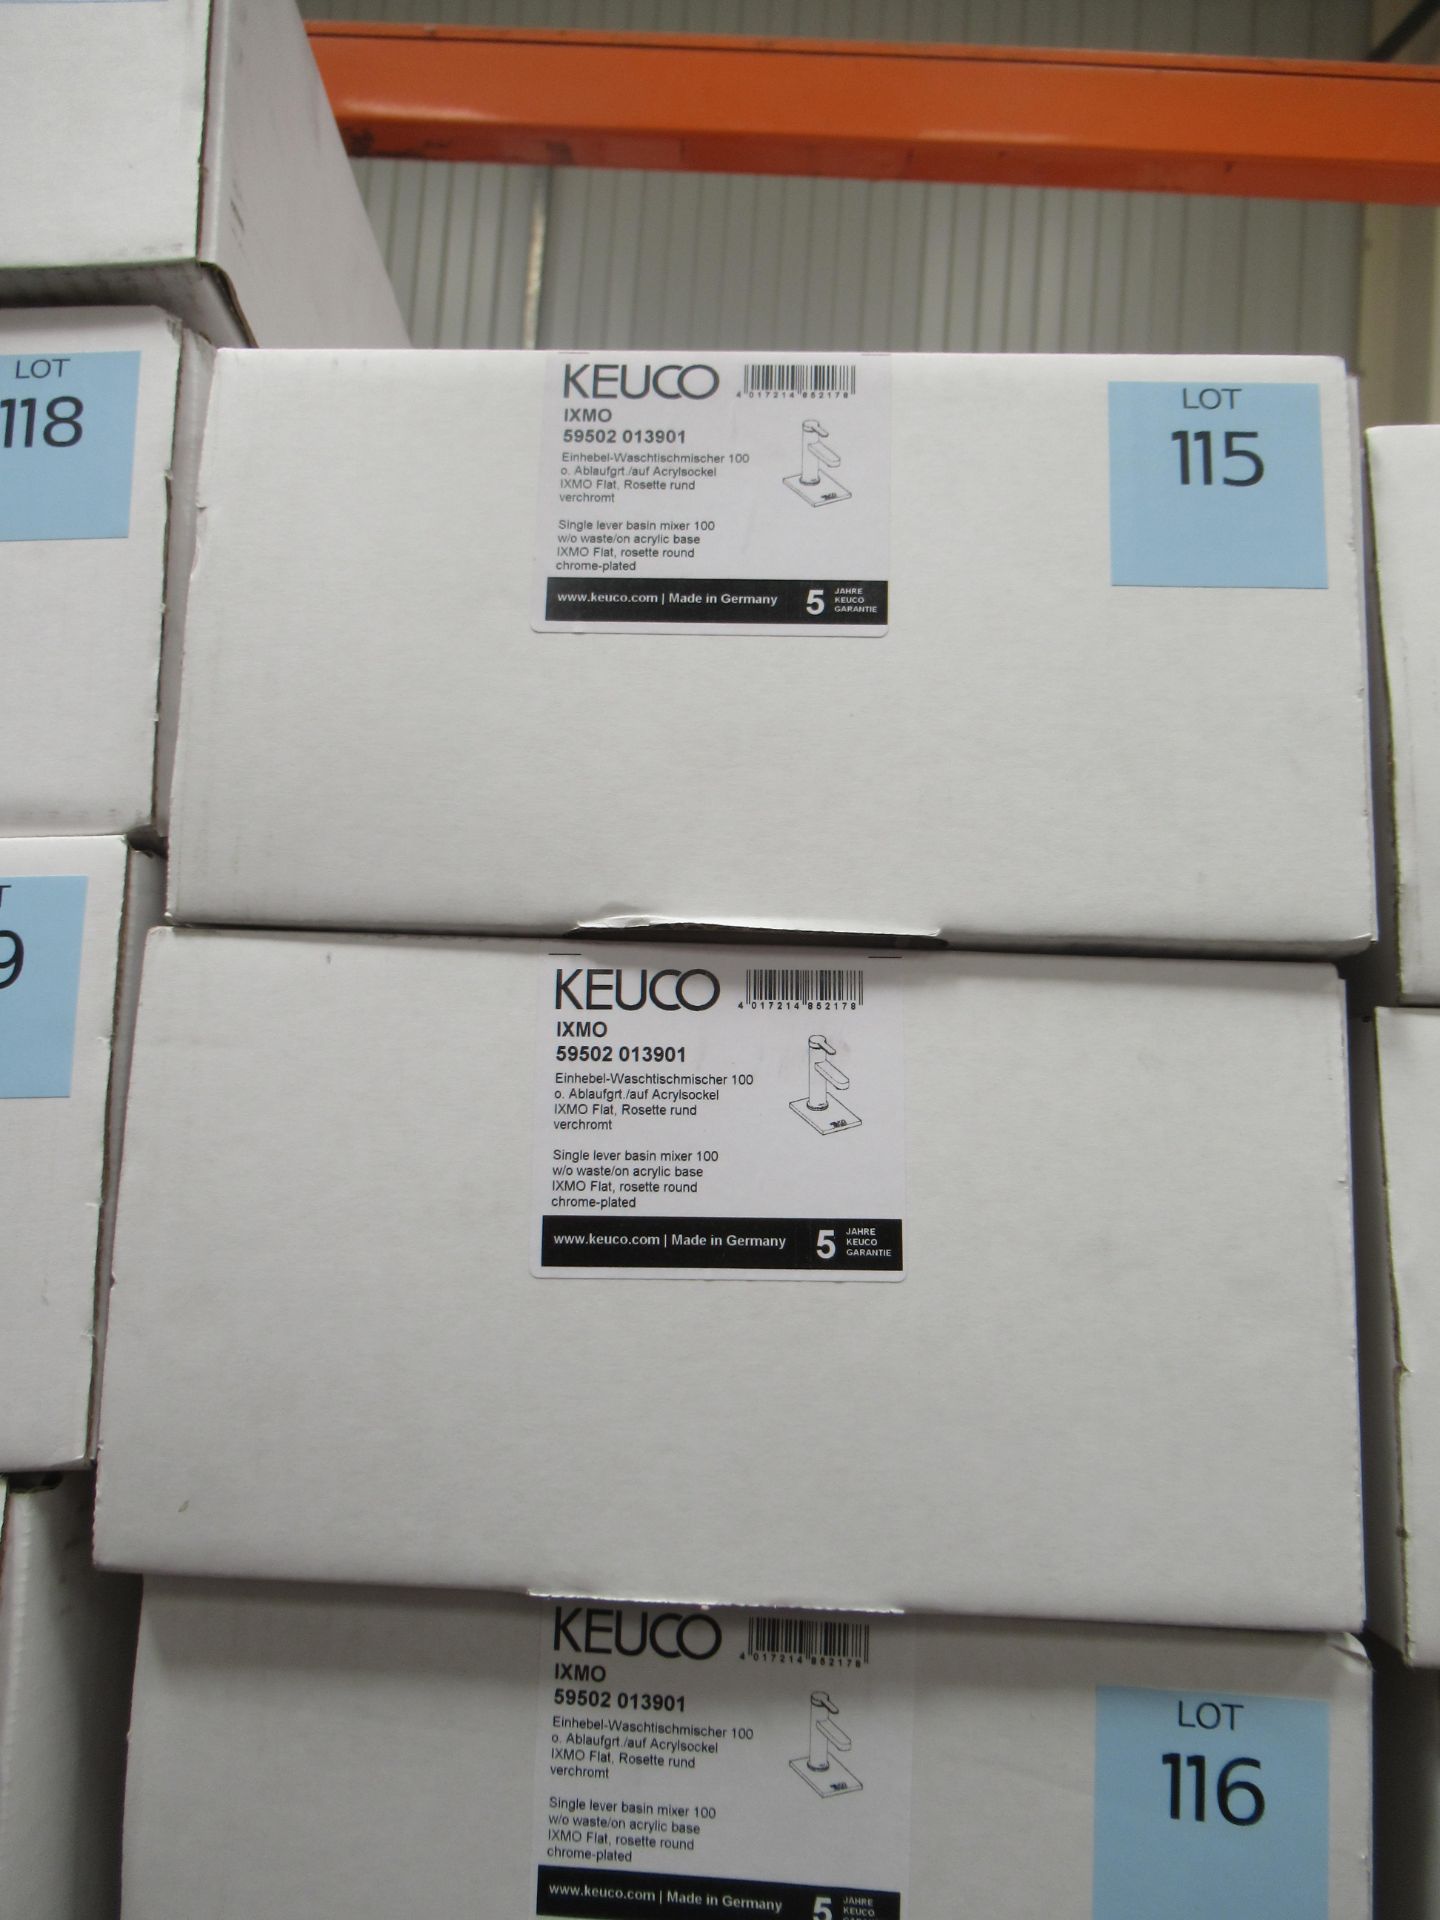 2 x Keuco IXMO Single Lever Basin Mixer 100-Tap, Chrome Plated, P/N 59502-013901